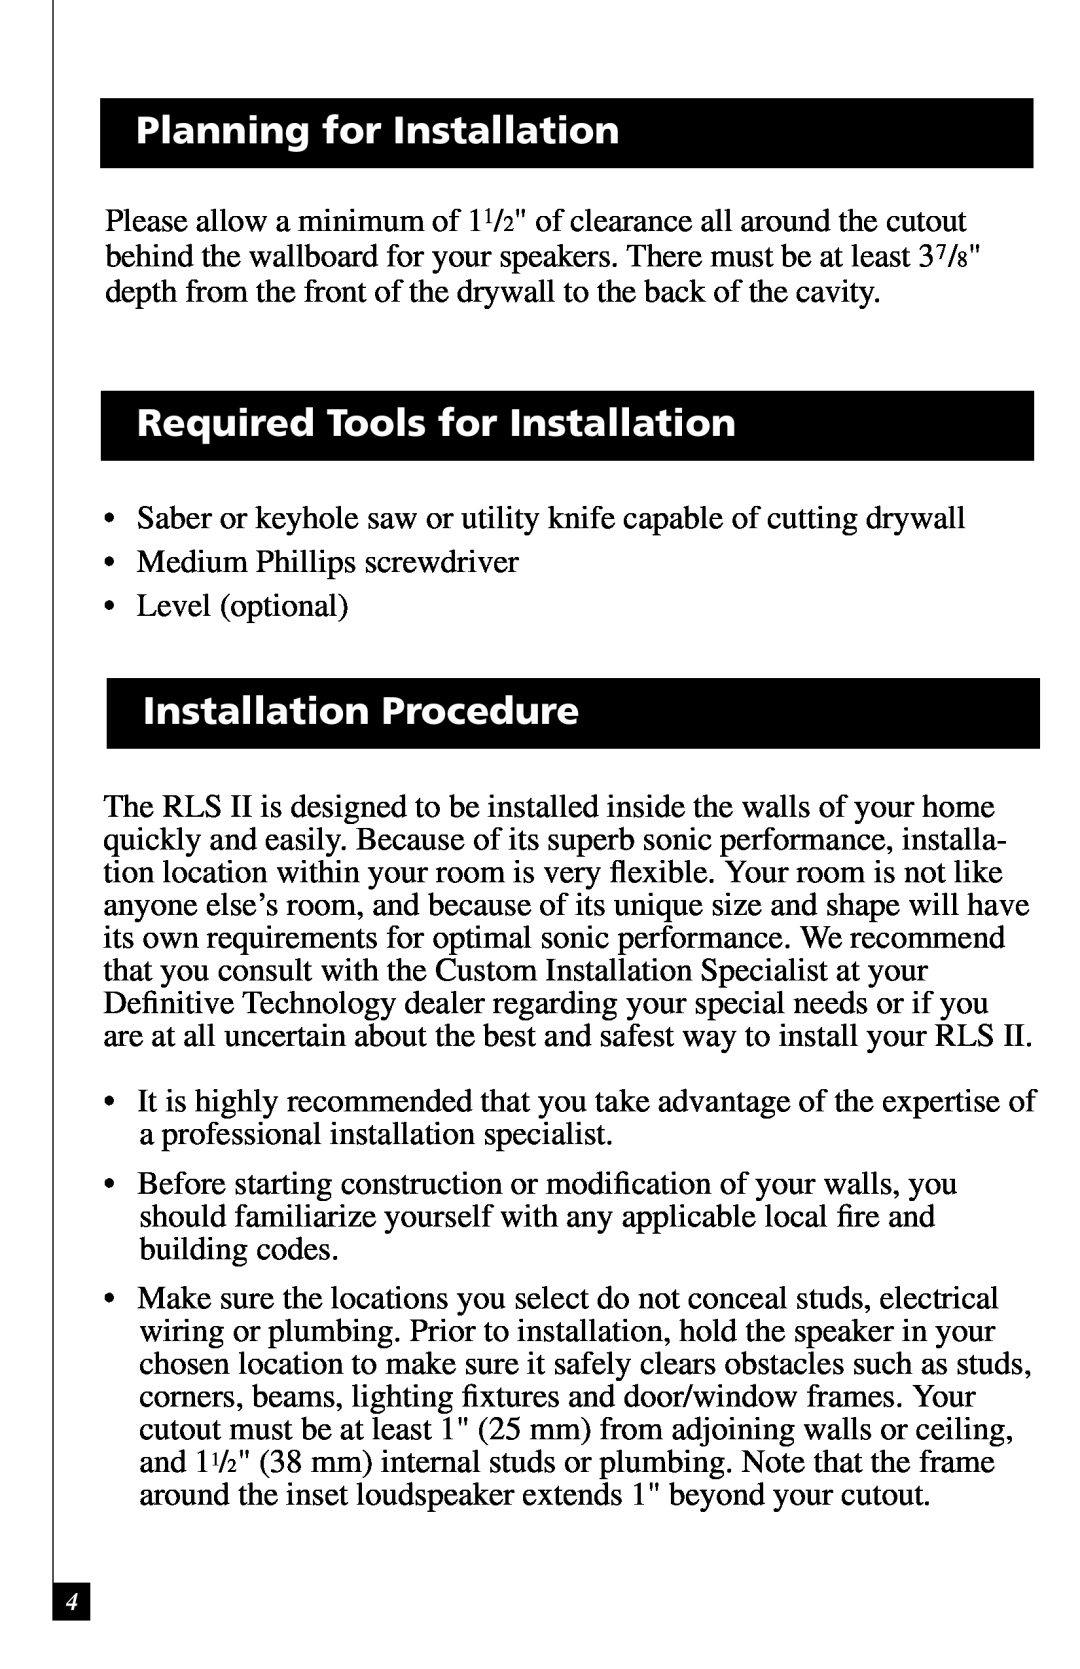 Definitive Technology RLS II Planning for Installation, Required Tools for Installation, Installation Procedure 